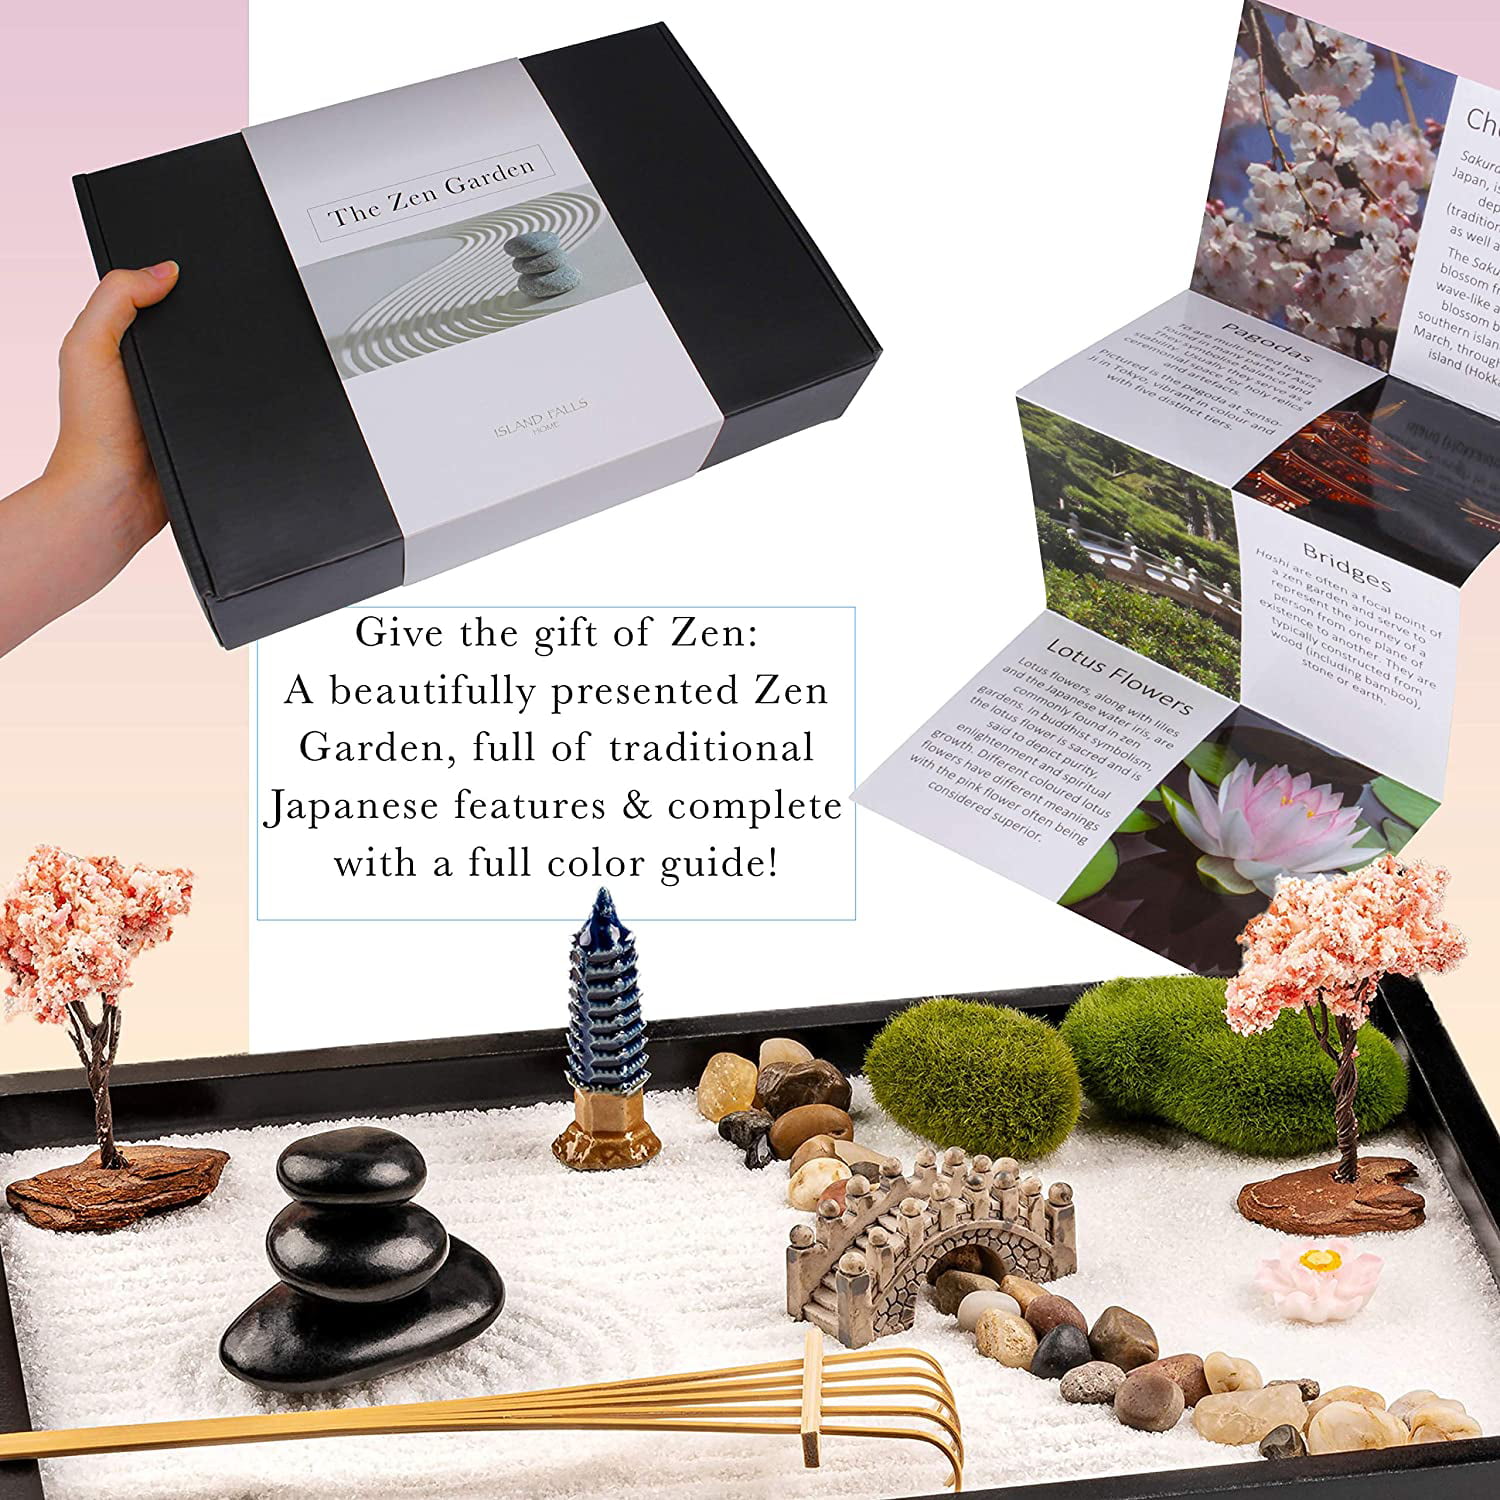 Zen Garden Sandbox-Mini Zen Garden Sea Life for Desk-Zen Garden Accessories,Sand Tray Play Kit for Kid,Adults,Office,Zen Decor,Sand Box Gift Set,Great Spiritual Gift Idea 